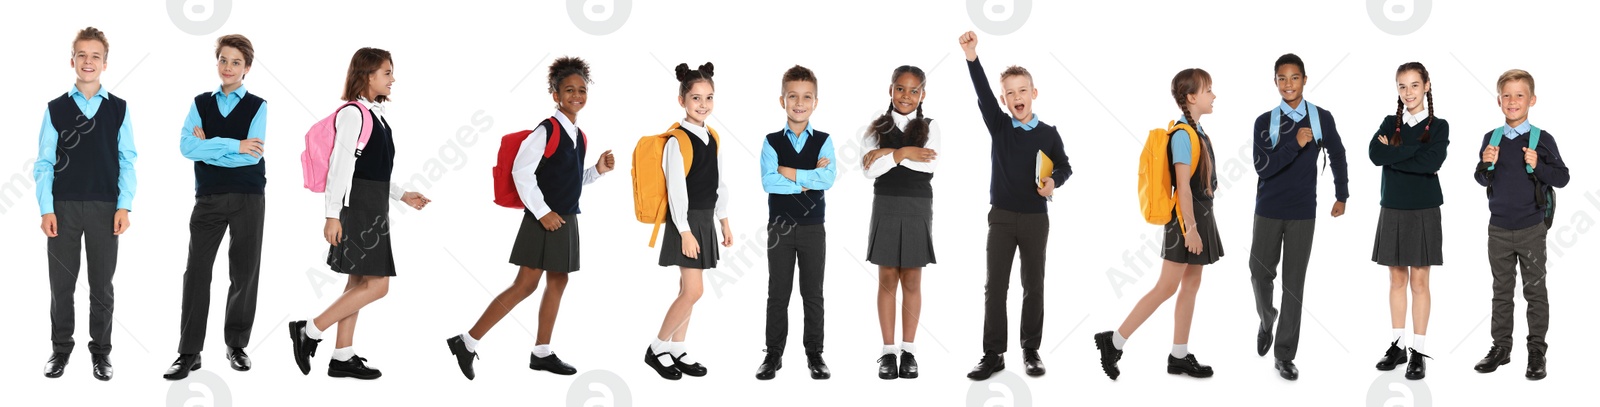 Image of Children in school uniforms on white background. Banner design